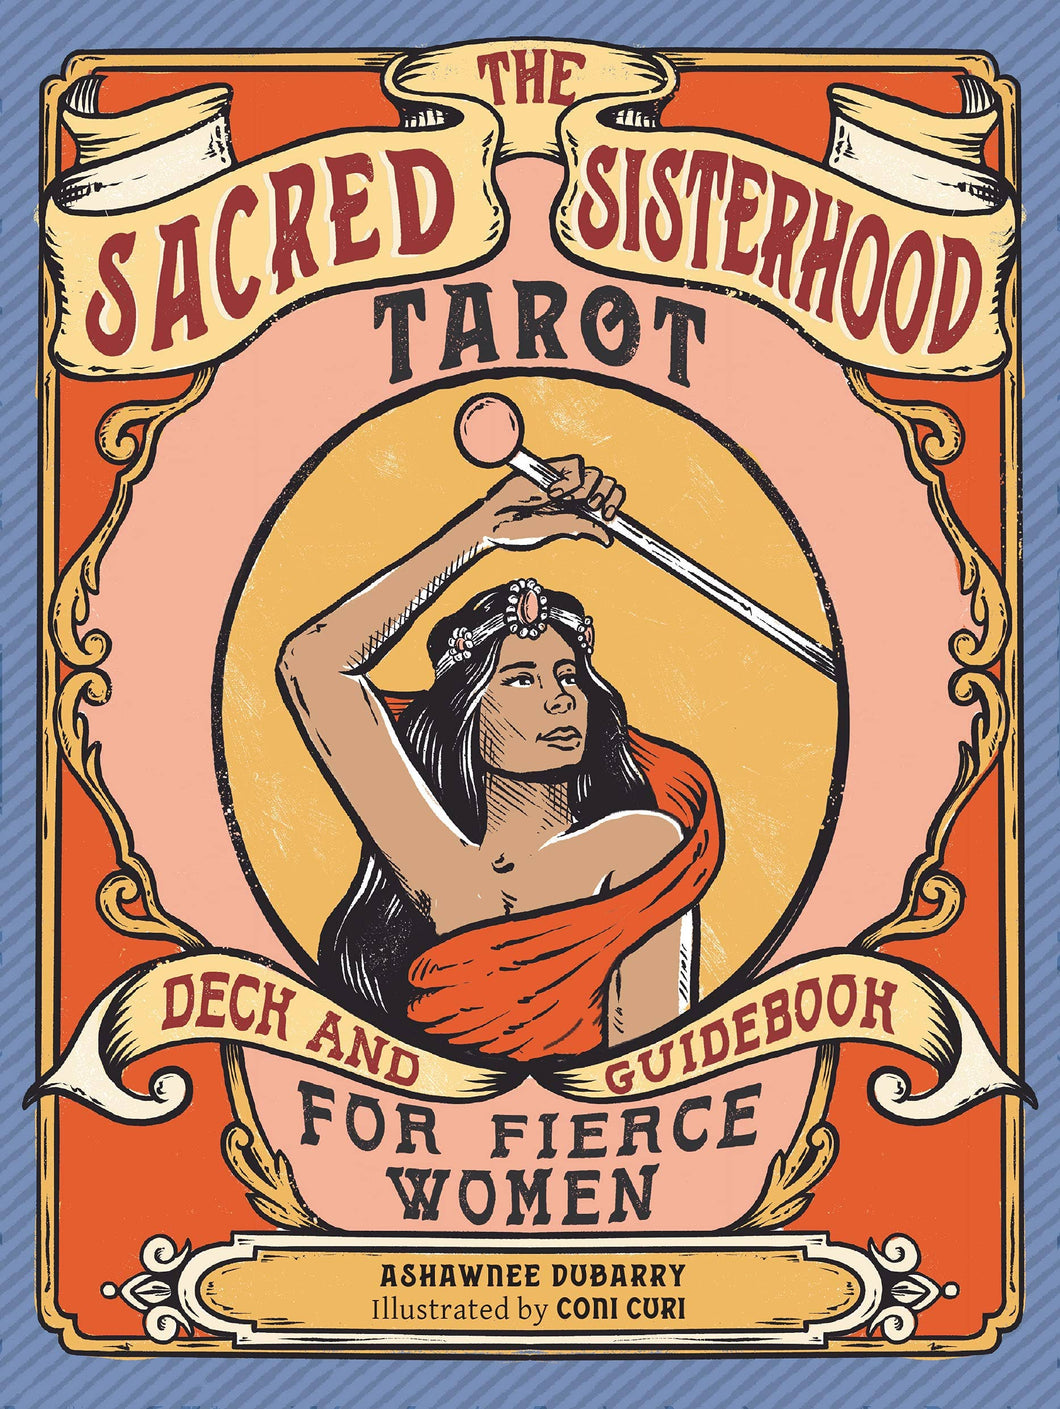 Microcosm Publishing & Distribution - Sacred Sisterhood Tarot: Deck and Guidebook for Fierce Women